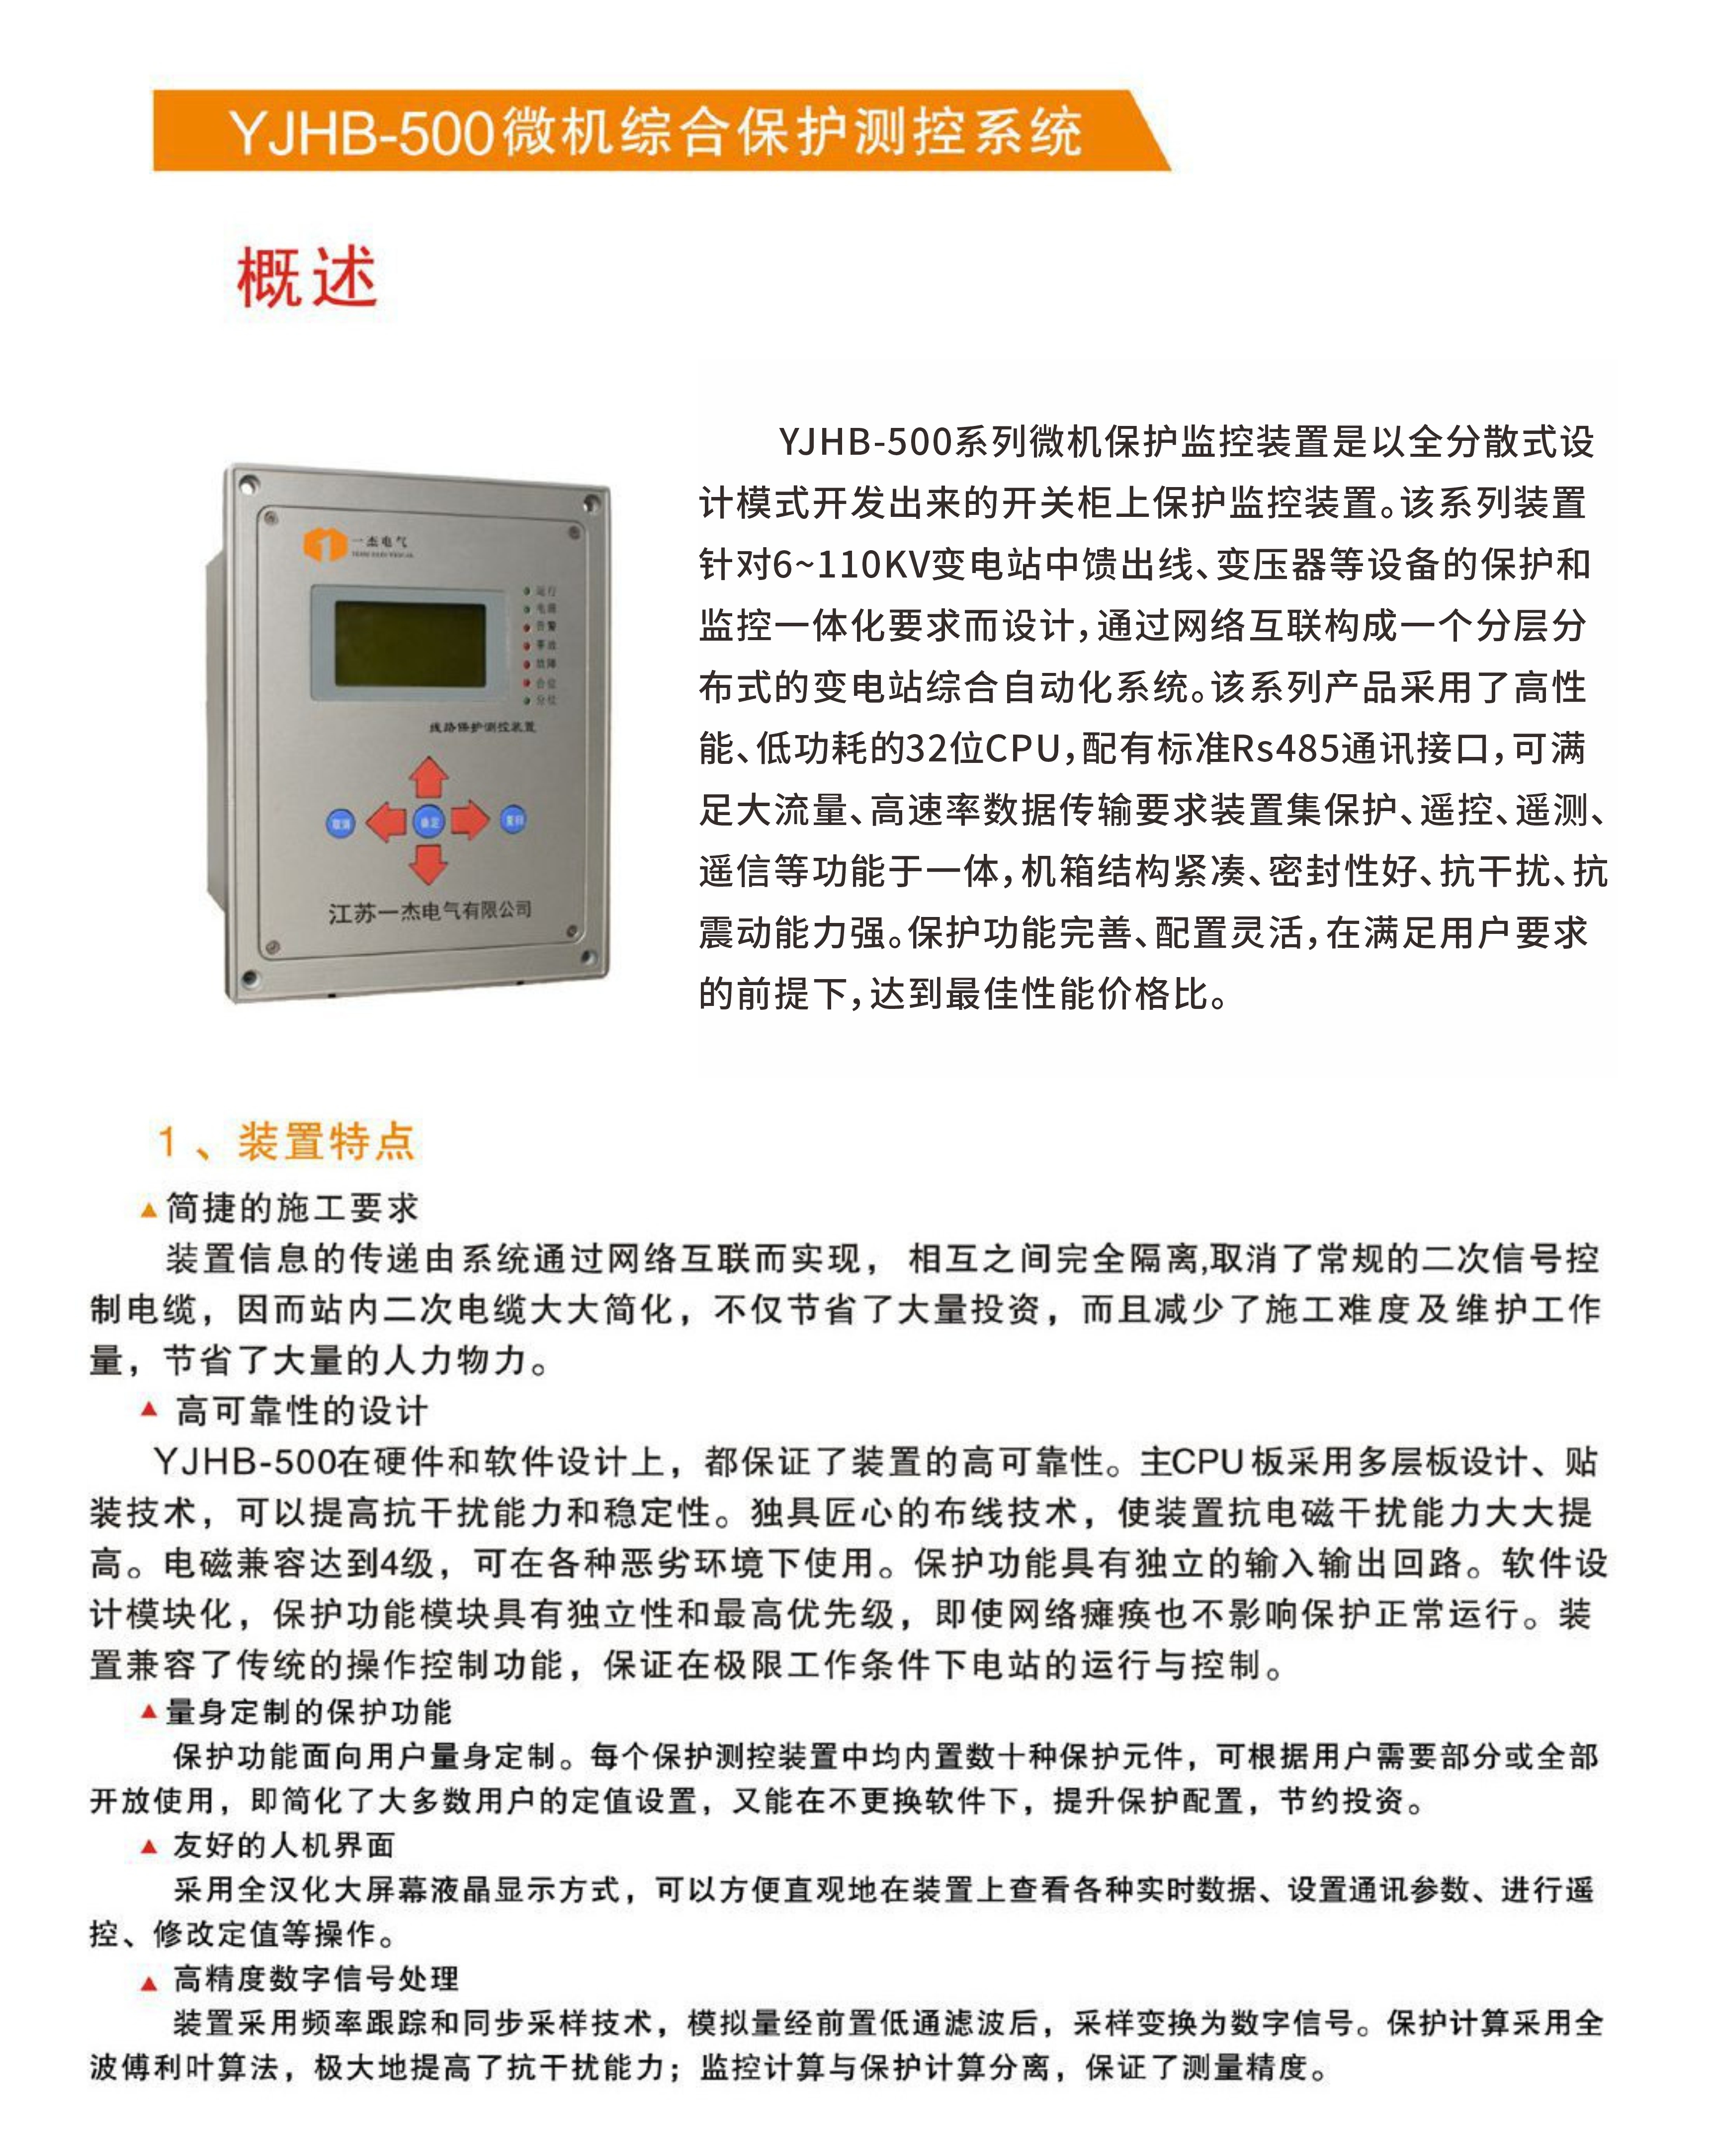 YJHD500系列微机综合保护装置